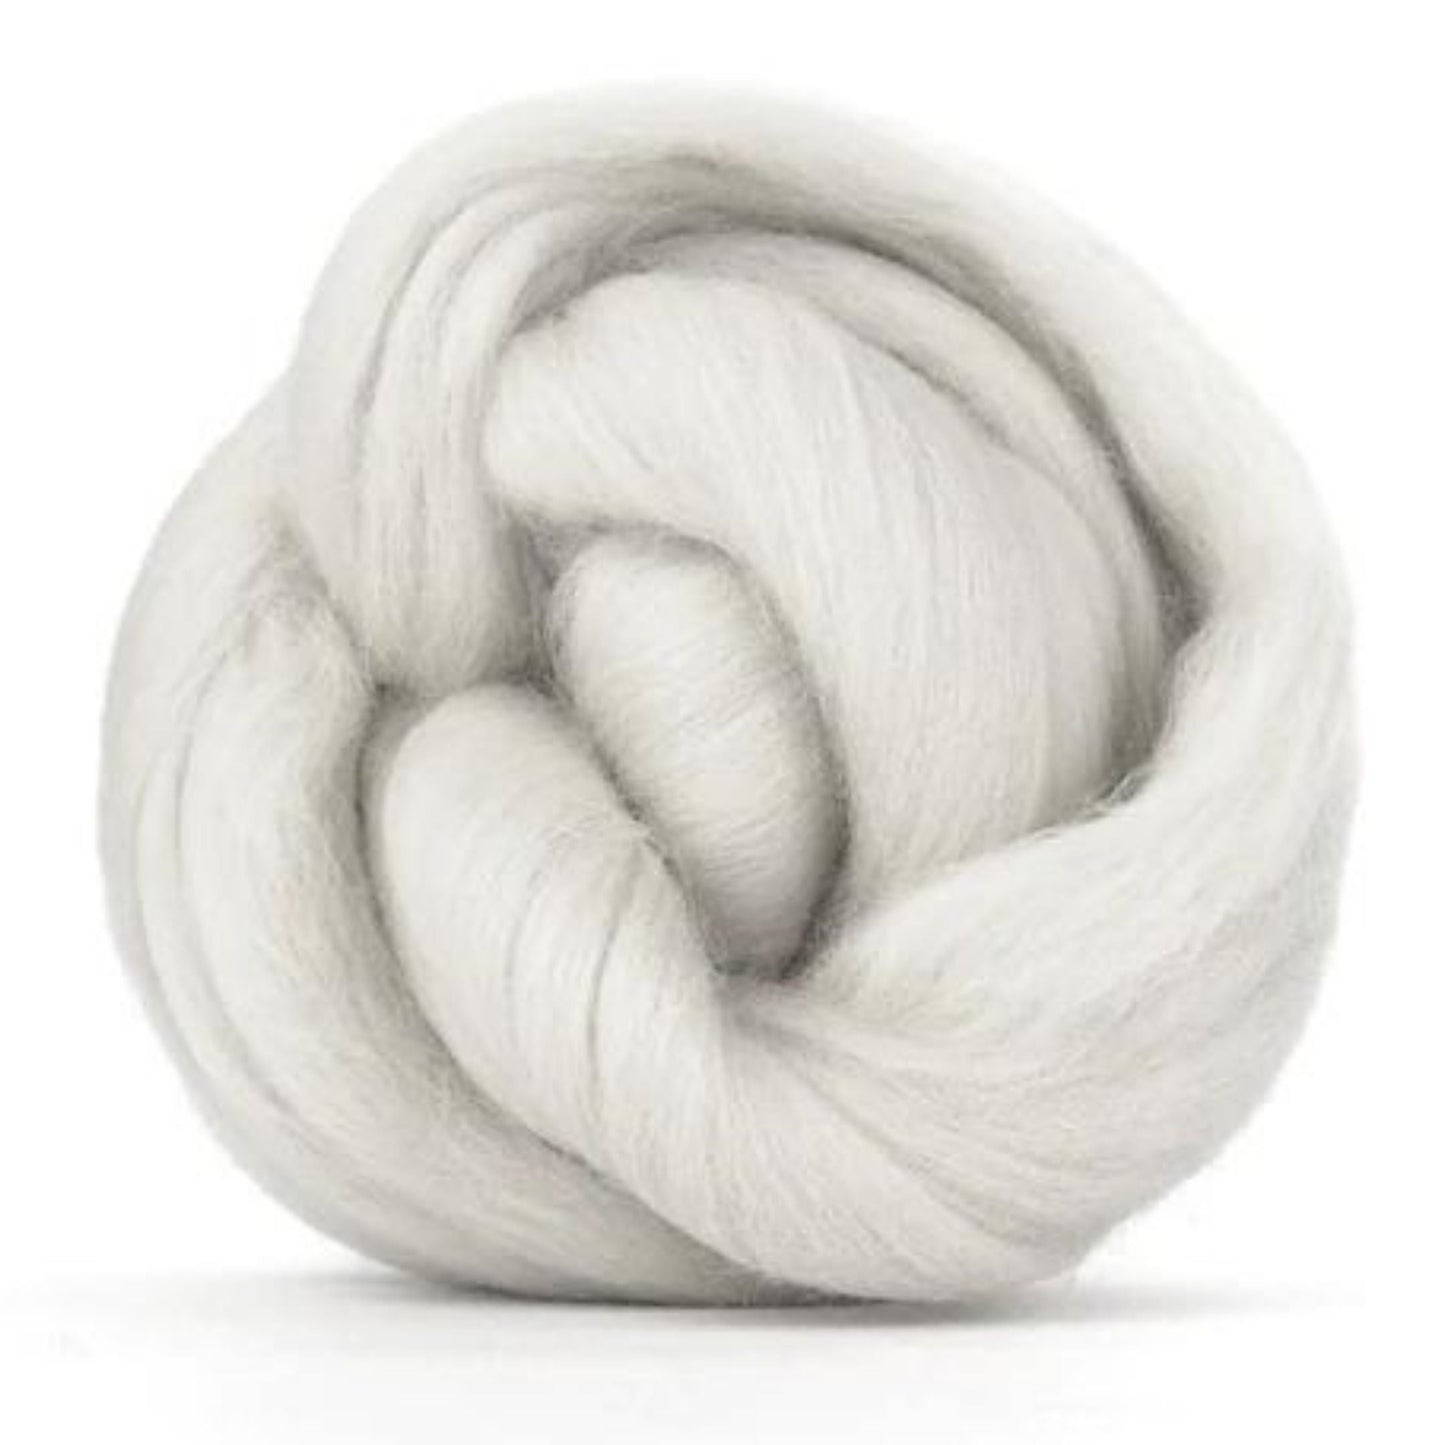 Dyed Merino Wool Tops | Premium 22 Micron, 64 Count Wool - Textile Indie 